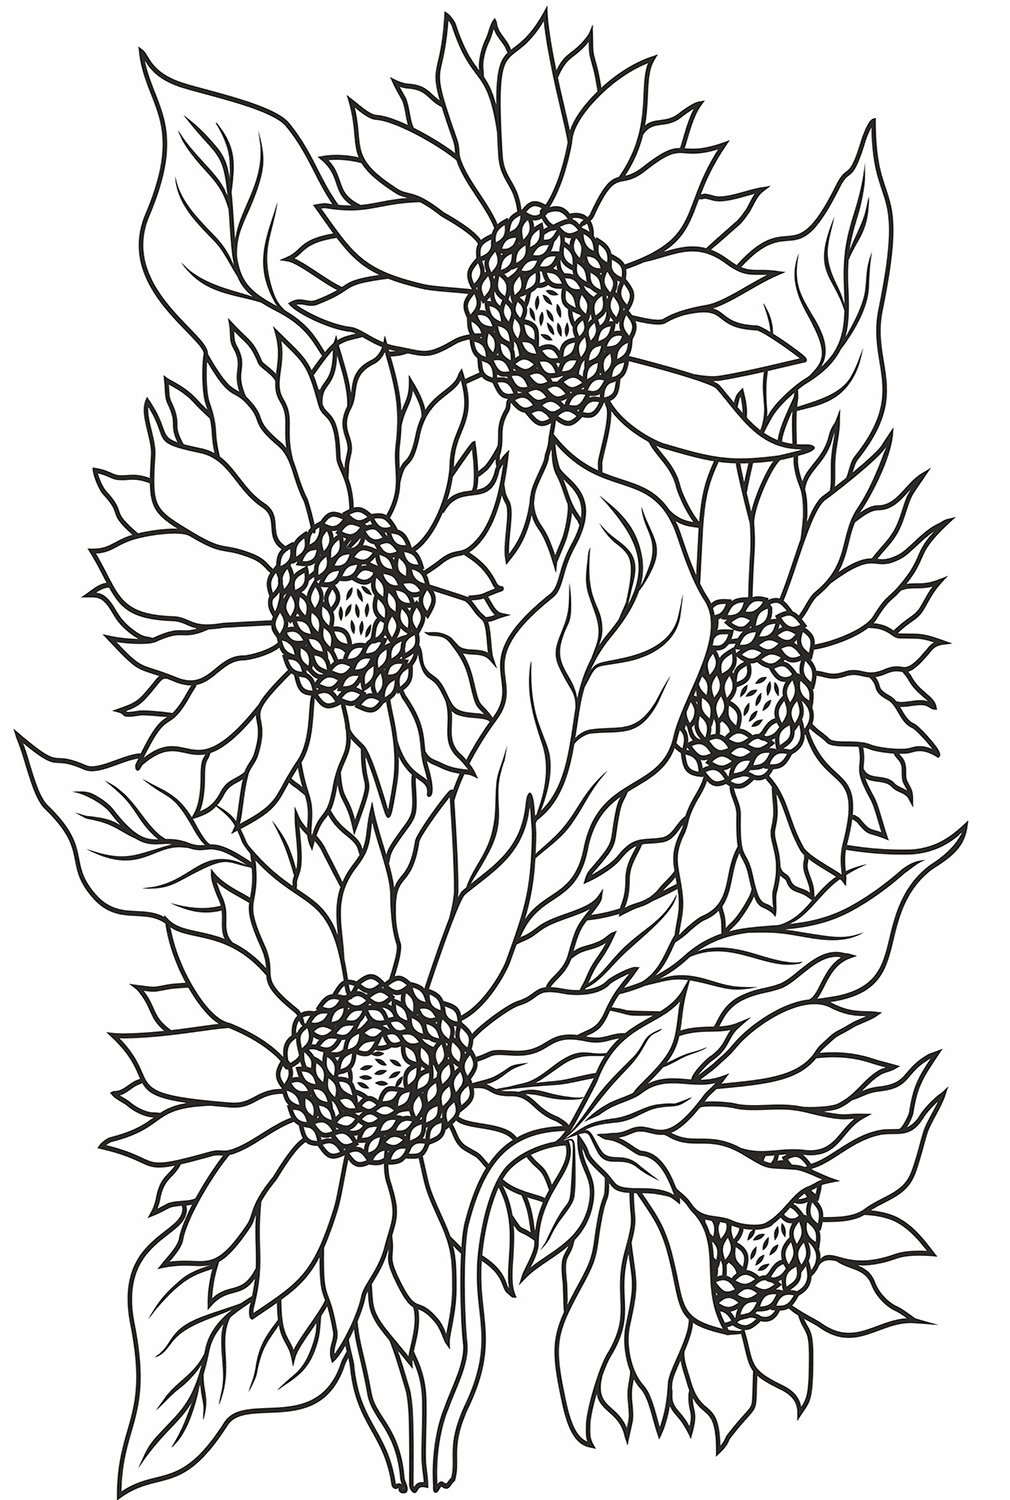 Beautiful Sunflowers from Sunflower